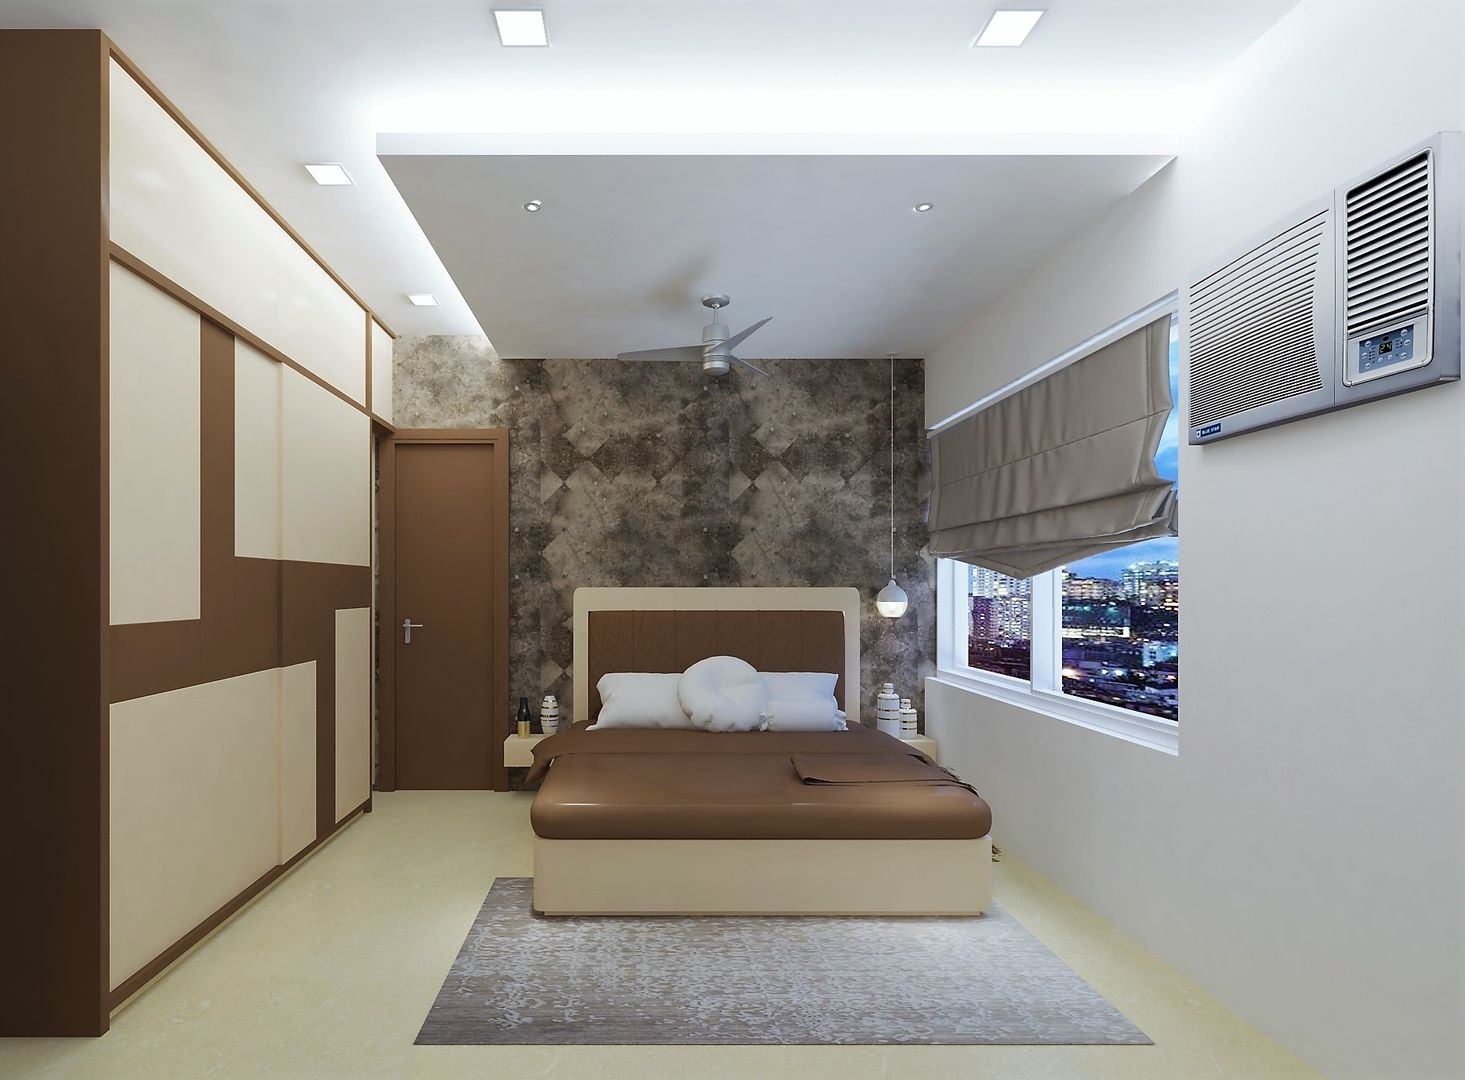 Bedroom Design Ideas, Golden Spiral Productionz (p) ltd Golden Spiral Productionz (p) ltd Camera da letto moderna